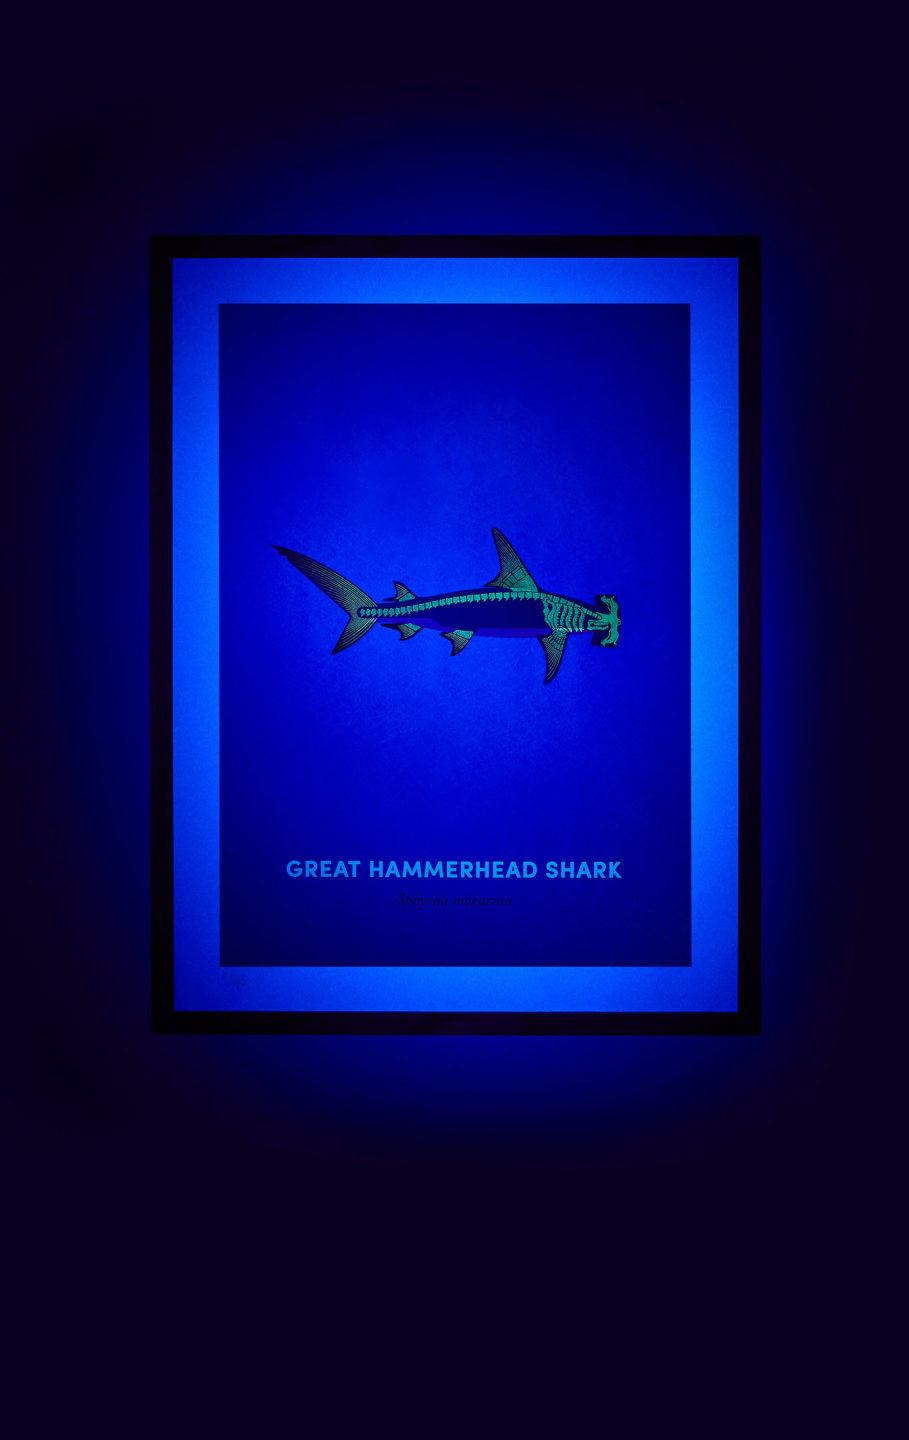 Great Hammerhead Shark screen print under UV light - shown on hover